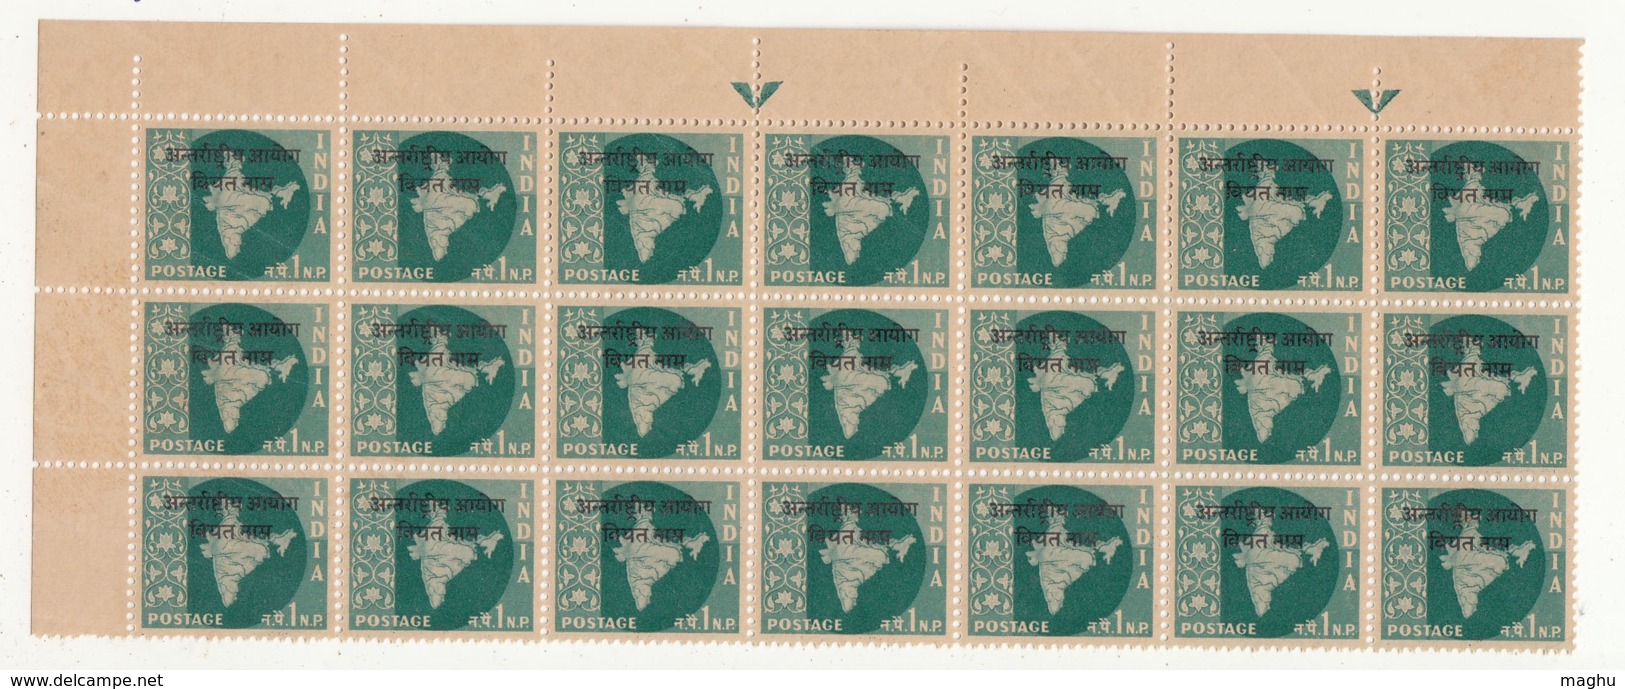 Block Of 21, 1np, Oveperprint Of 'Vietnam' On Map Series, Watermark Ashokan, India MNH 1963 - Military Service Stamp